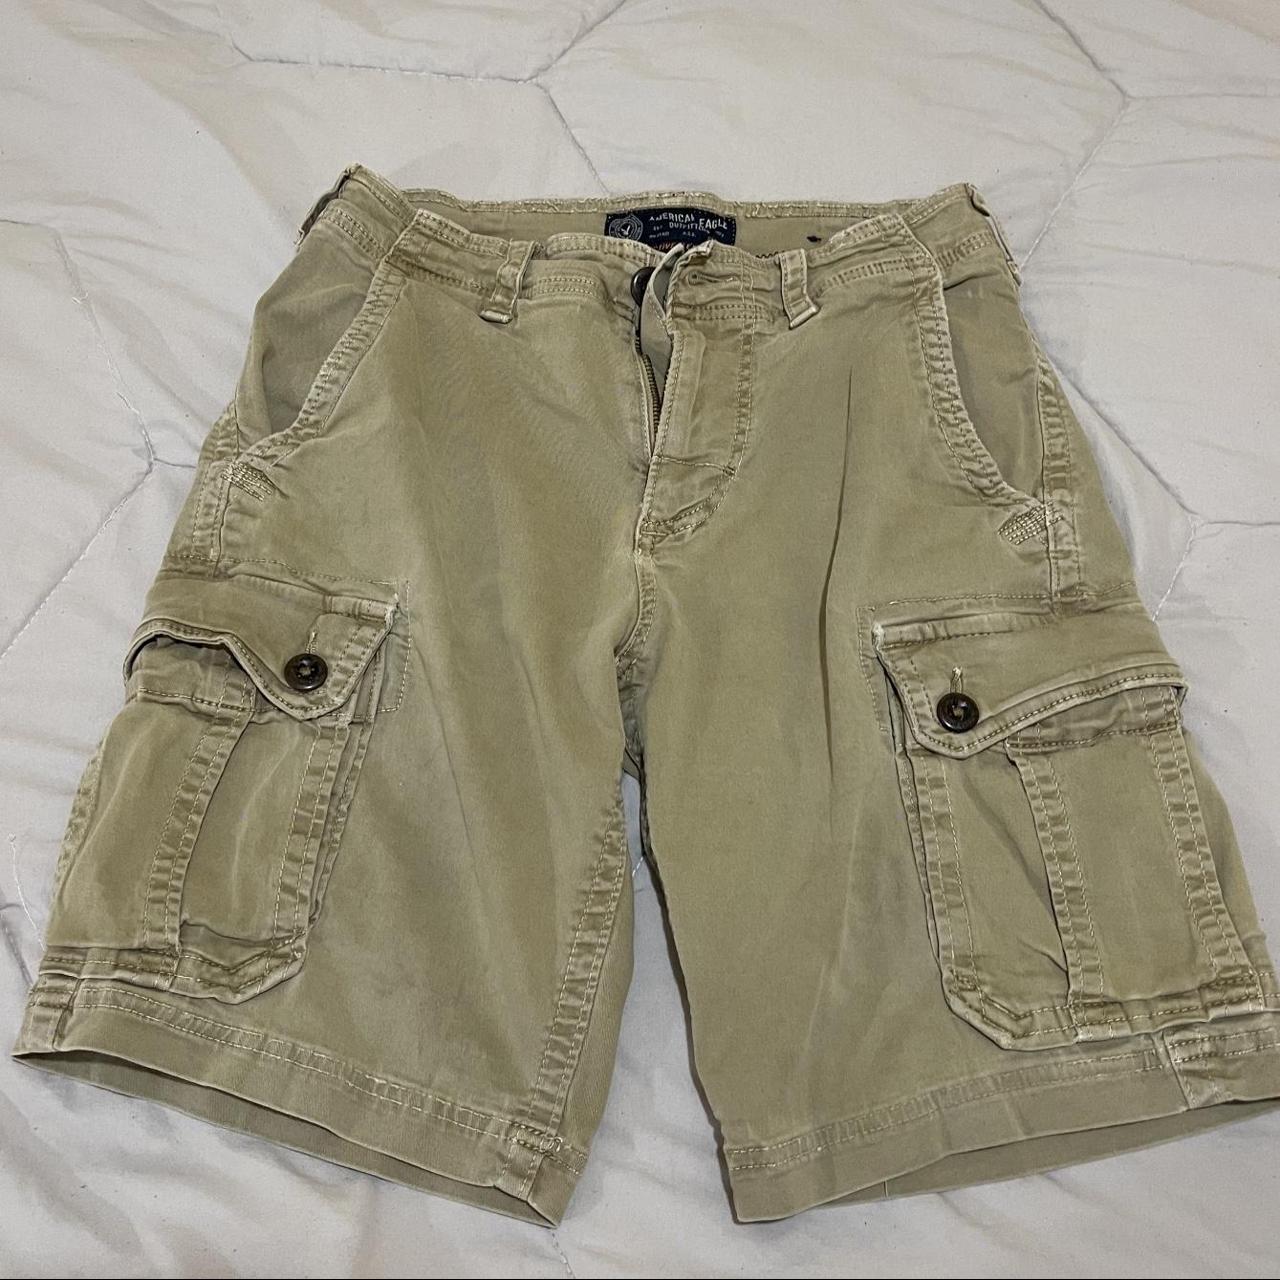 Vintage American Eagle khaki shorts size 28 -takes... - Depop